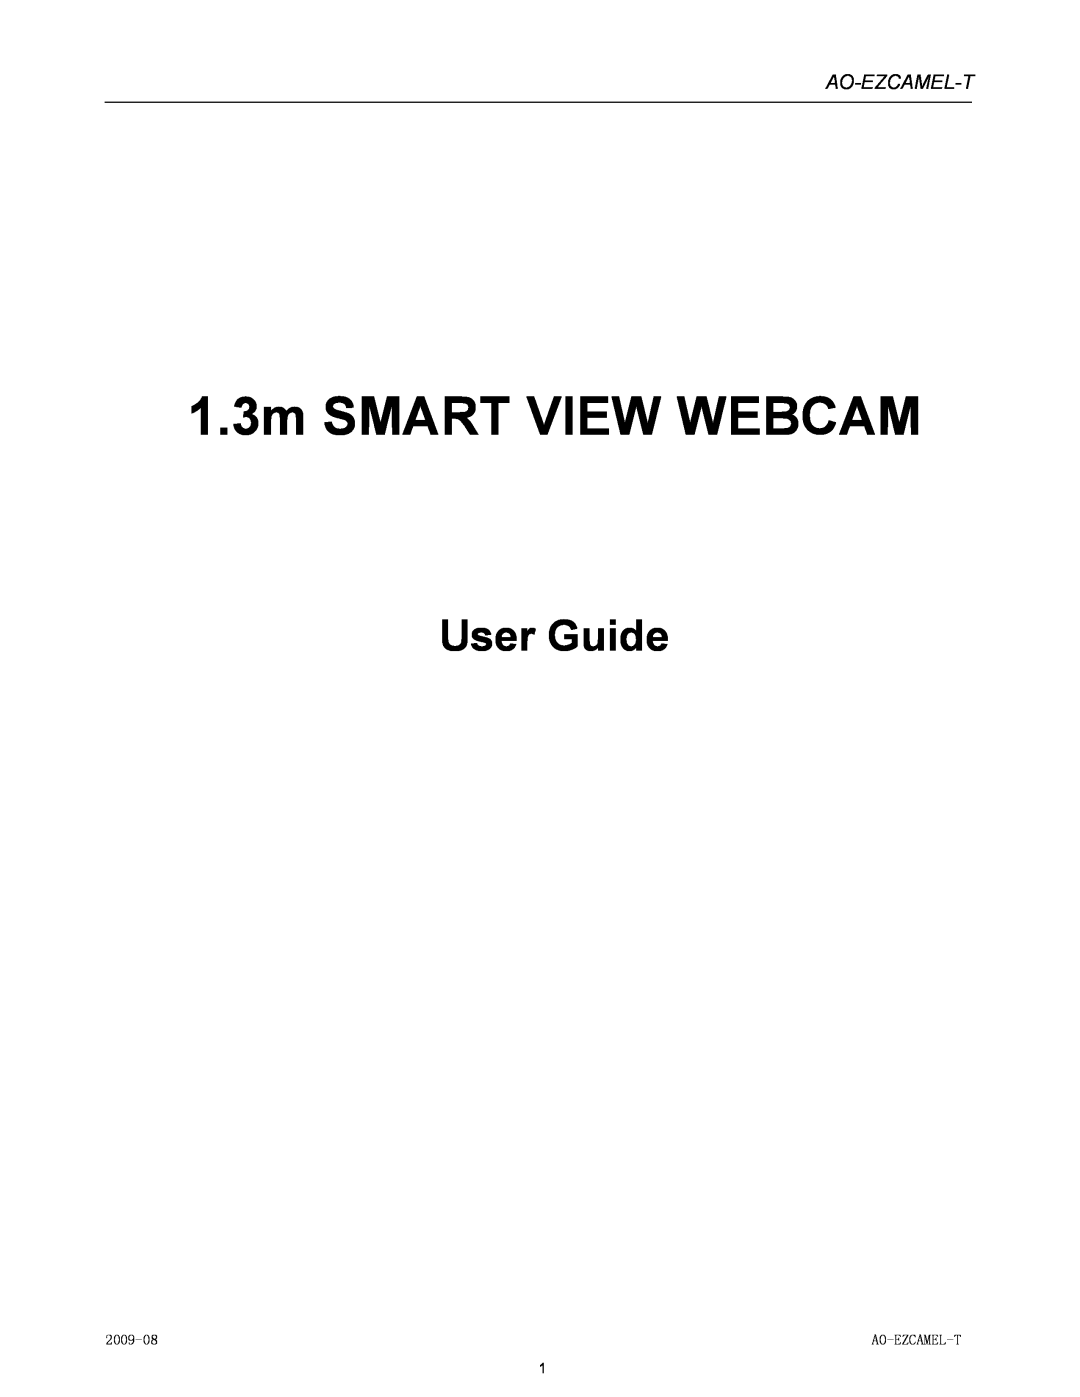 Laser AO-EZCAMEL-T manual Ao-Ezcamel-T, 1.3m SMART VIEW WEBCAM, User Guide, 2009-08 